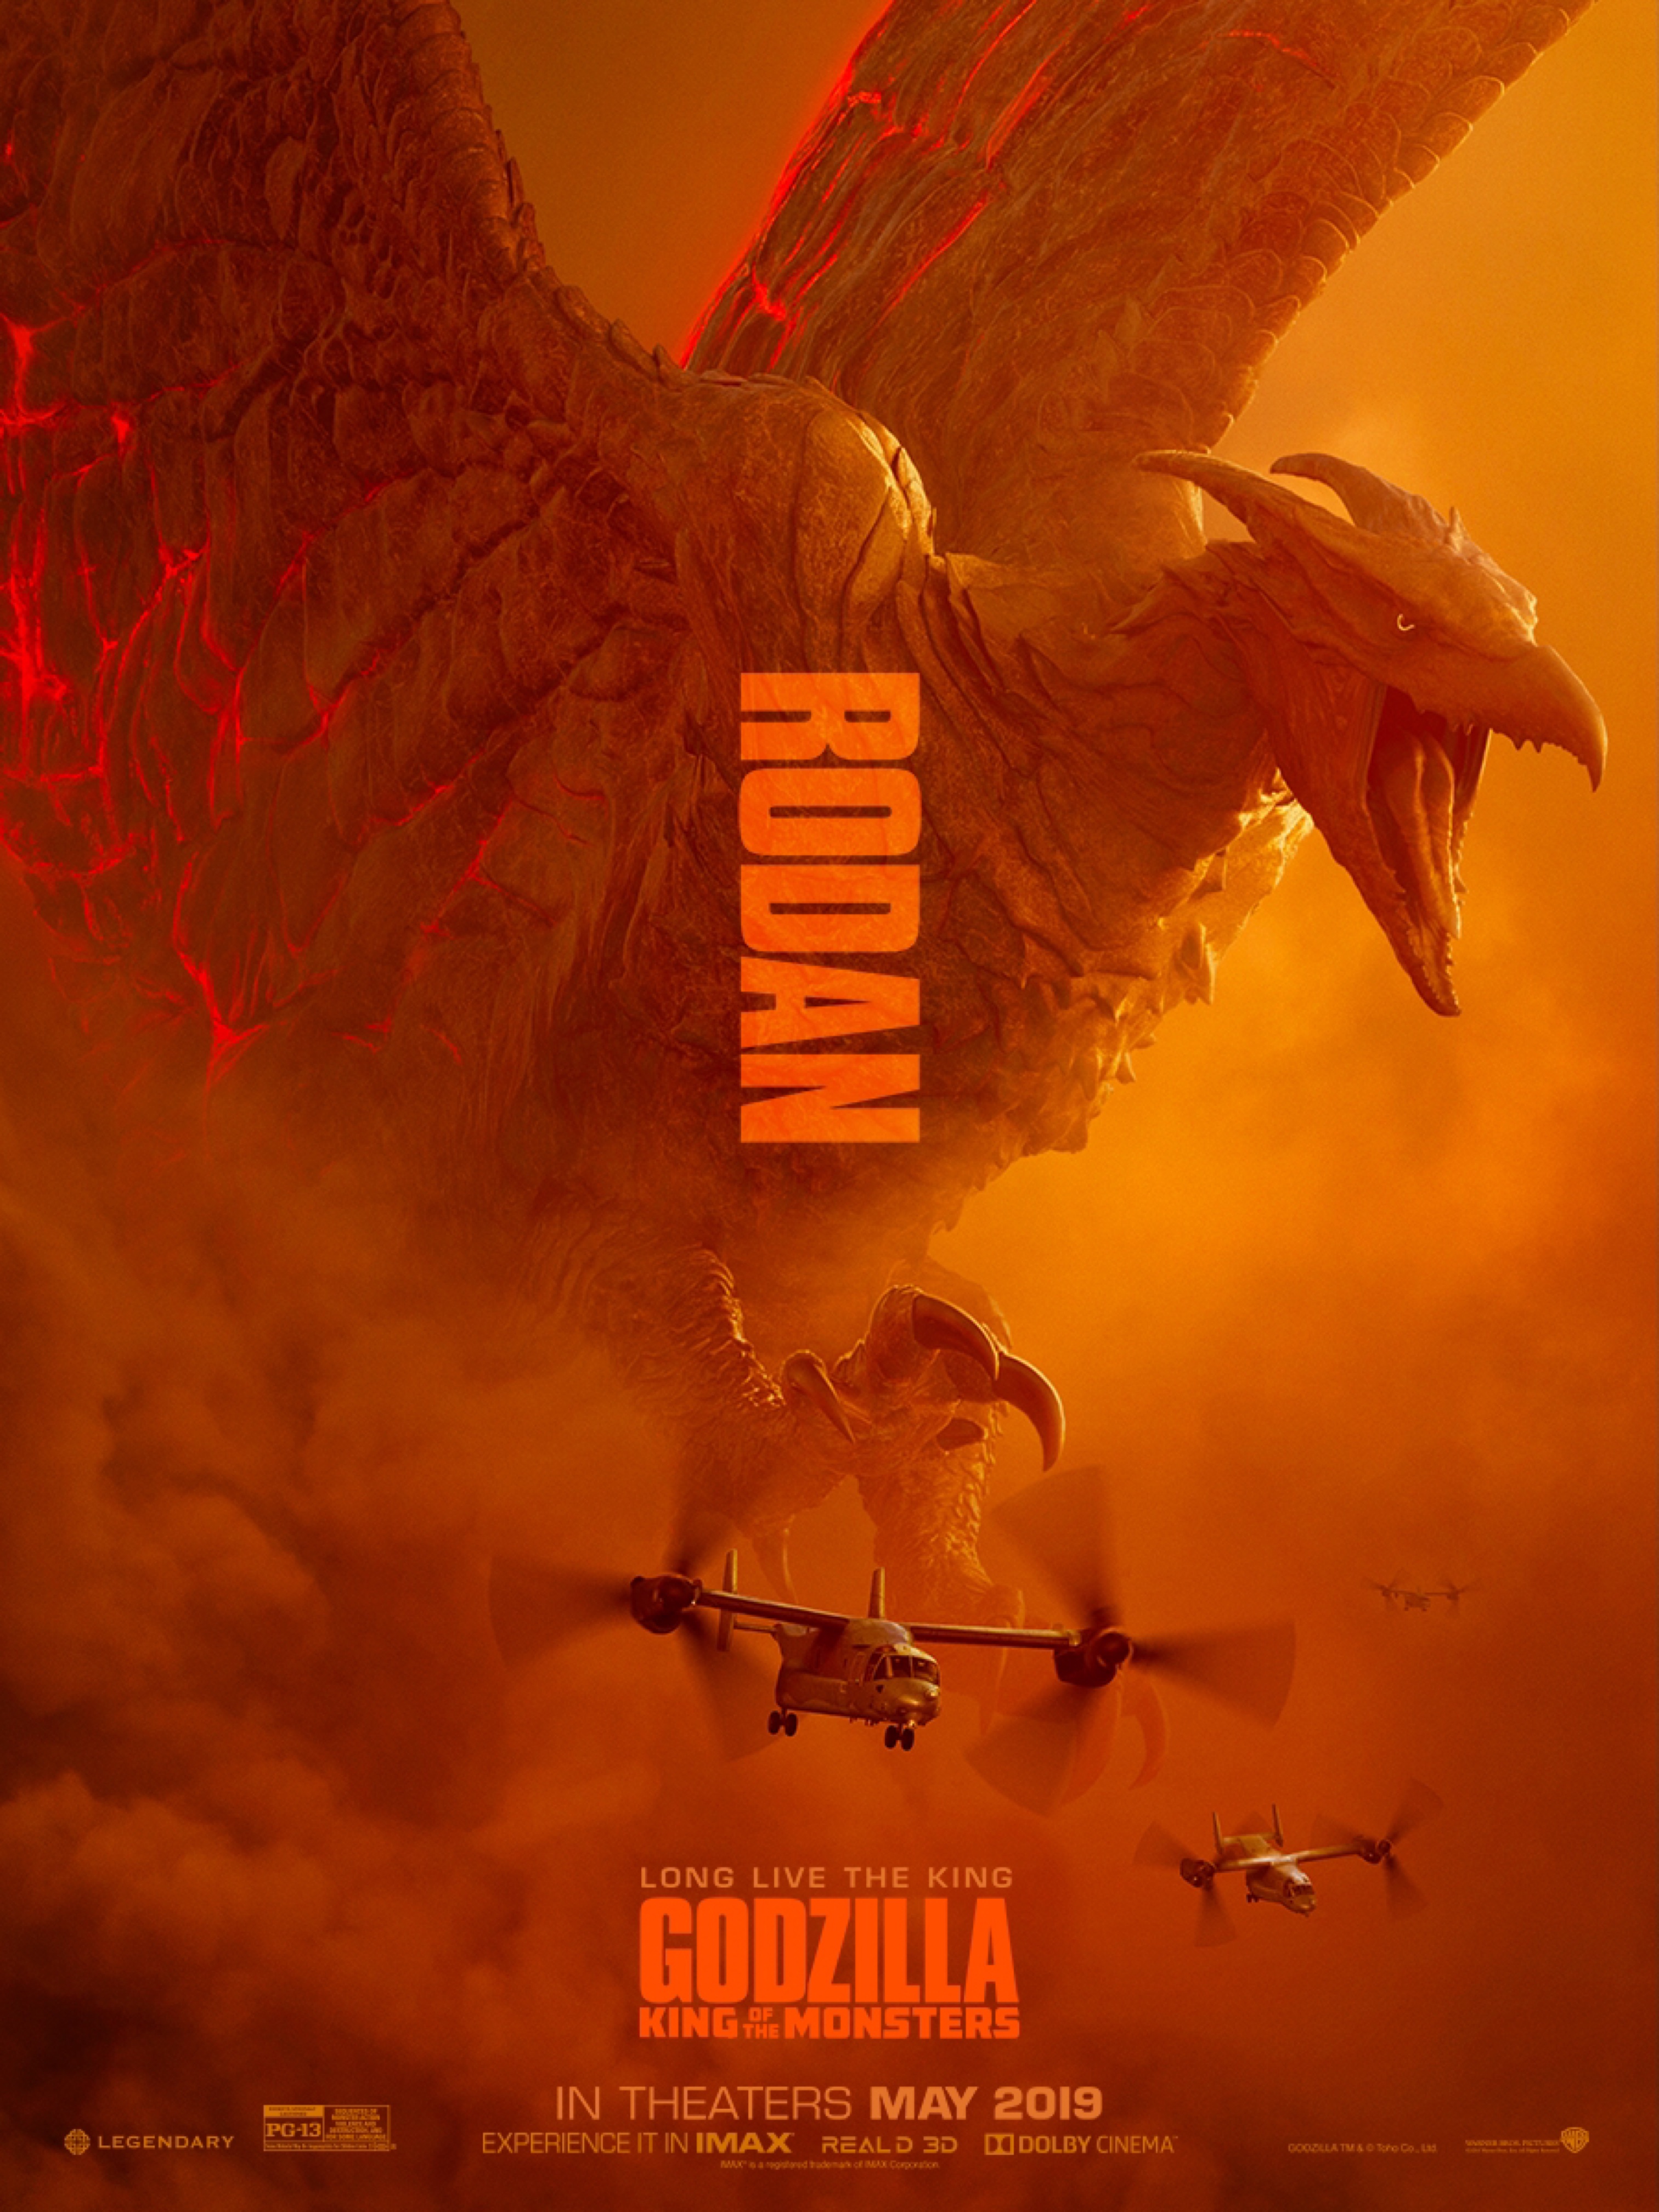  design 4 official movie poster design godzilla